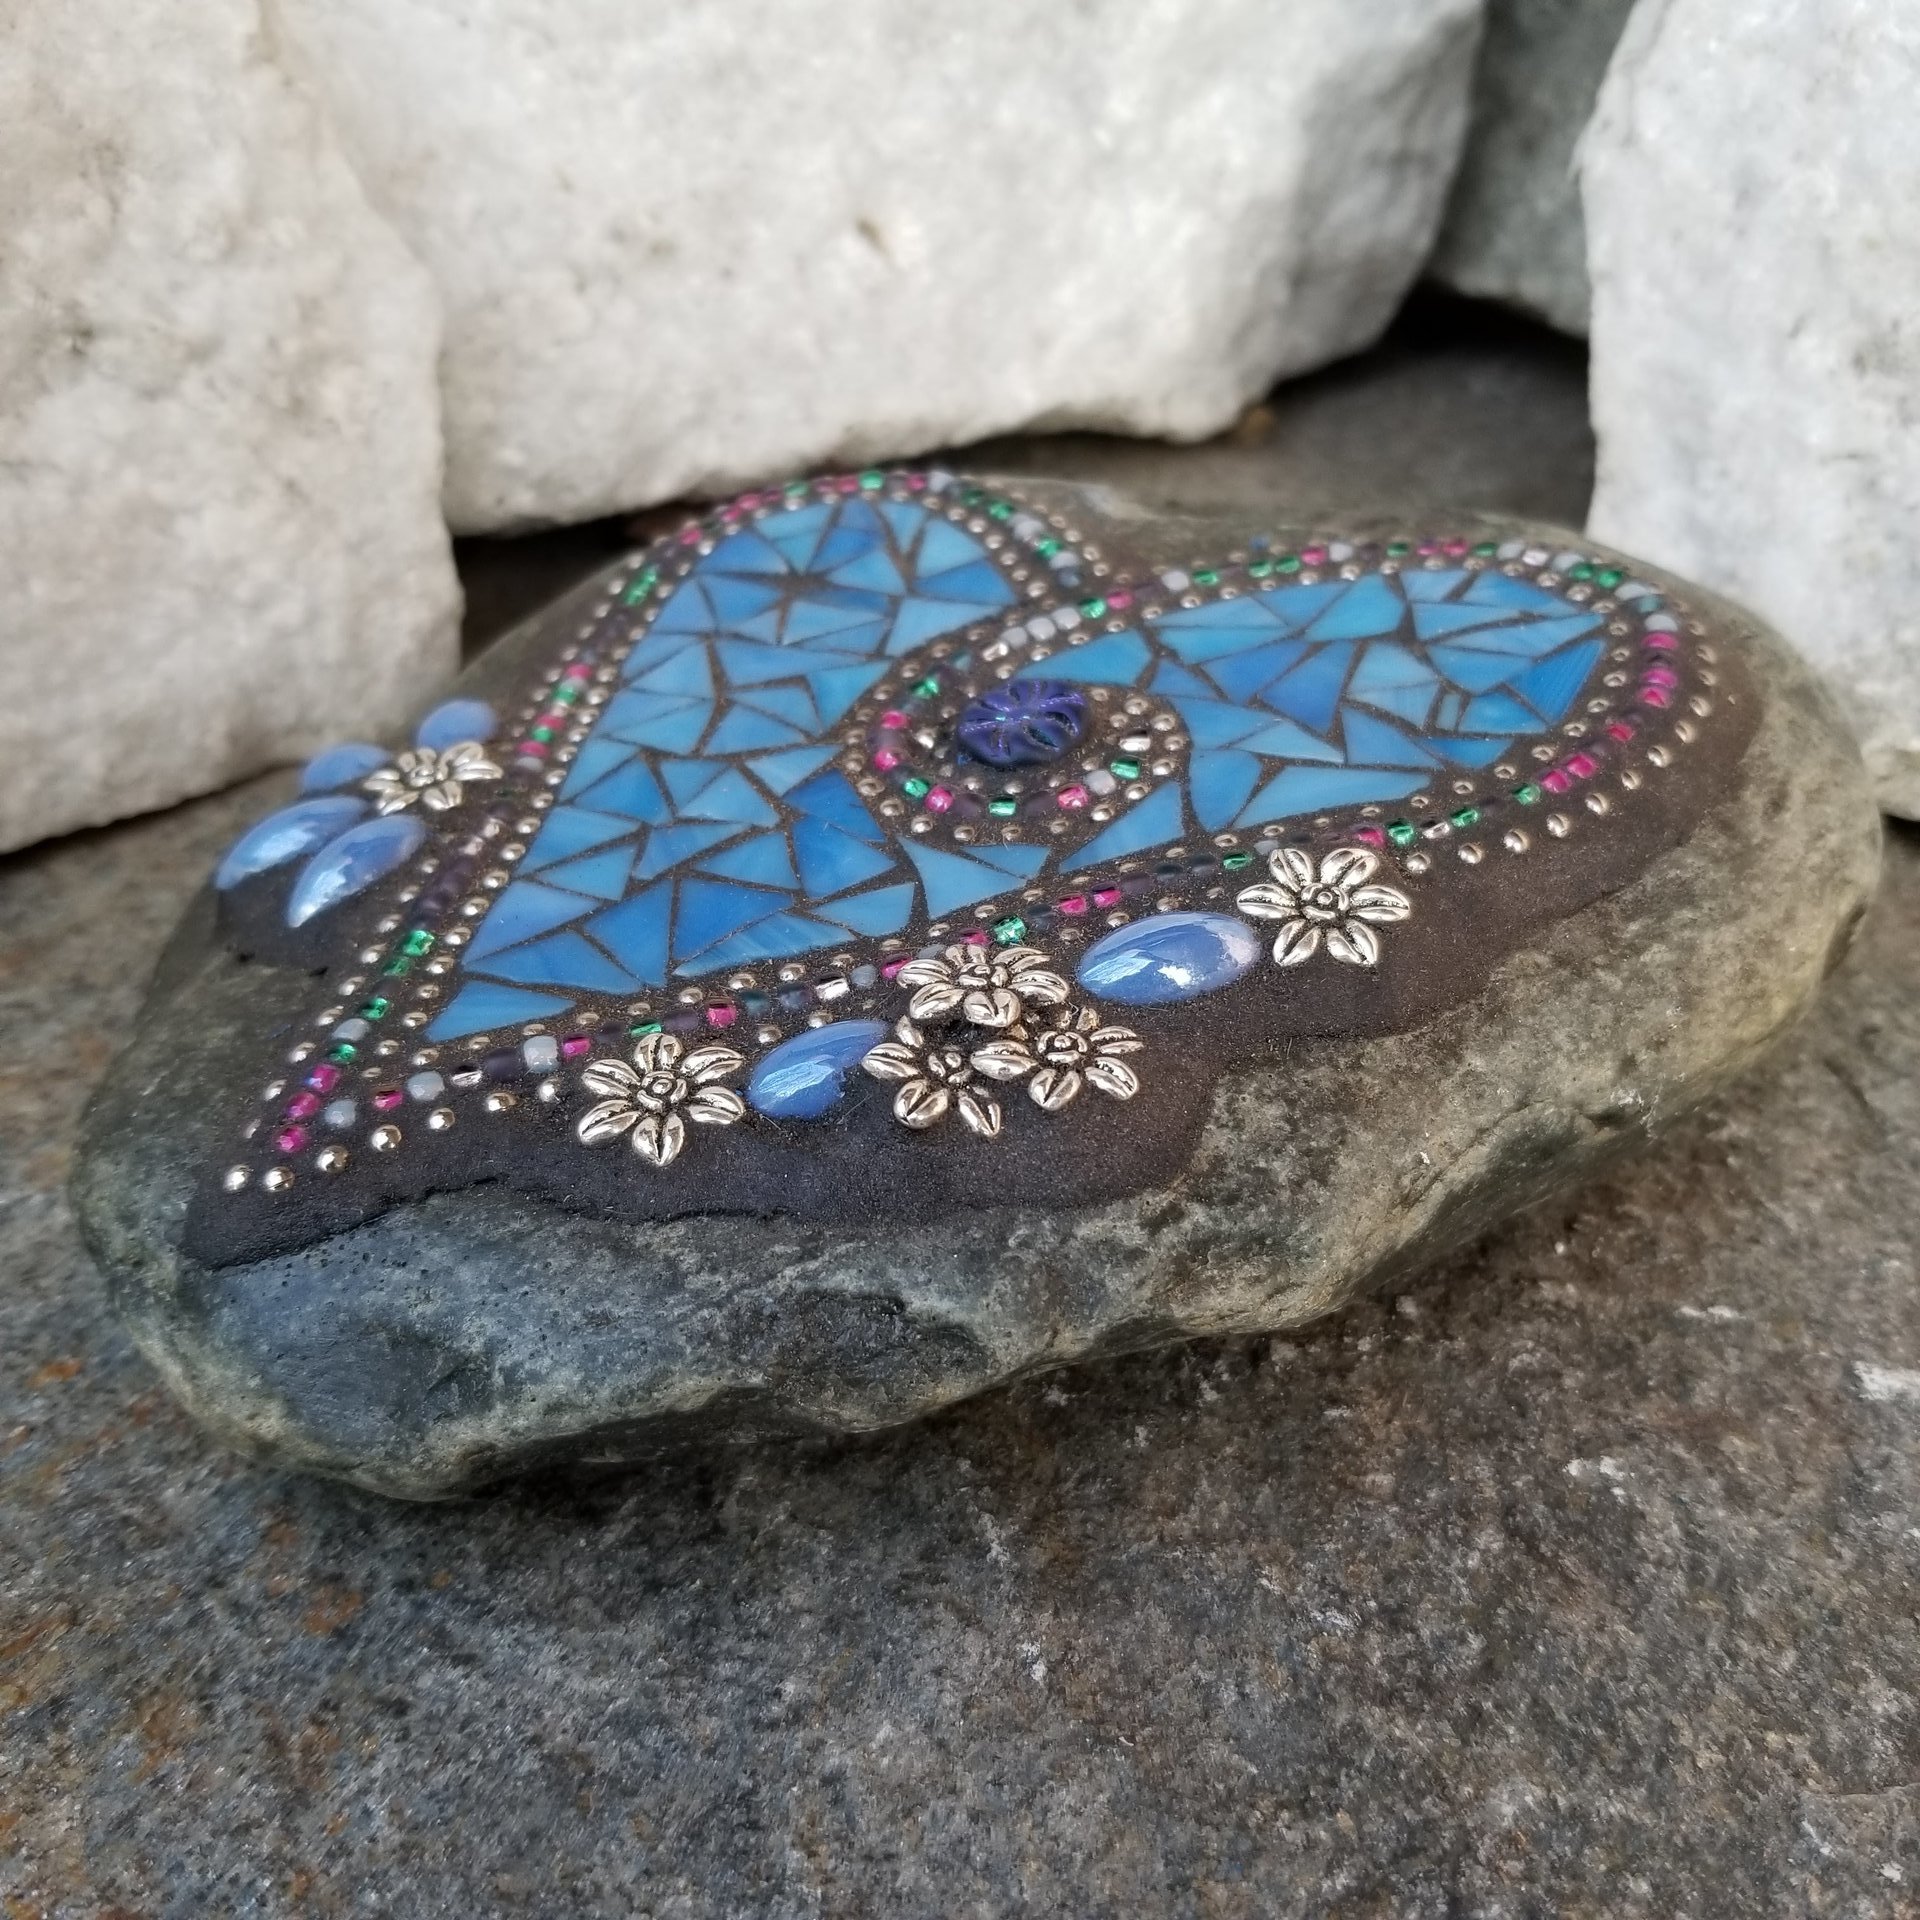 Blue Mosaic Heart Garden Stone, Gardner Gift, Garden Decor